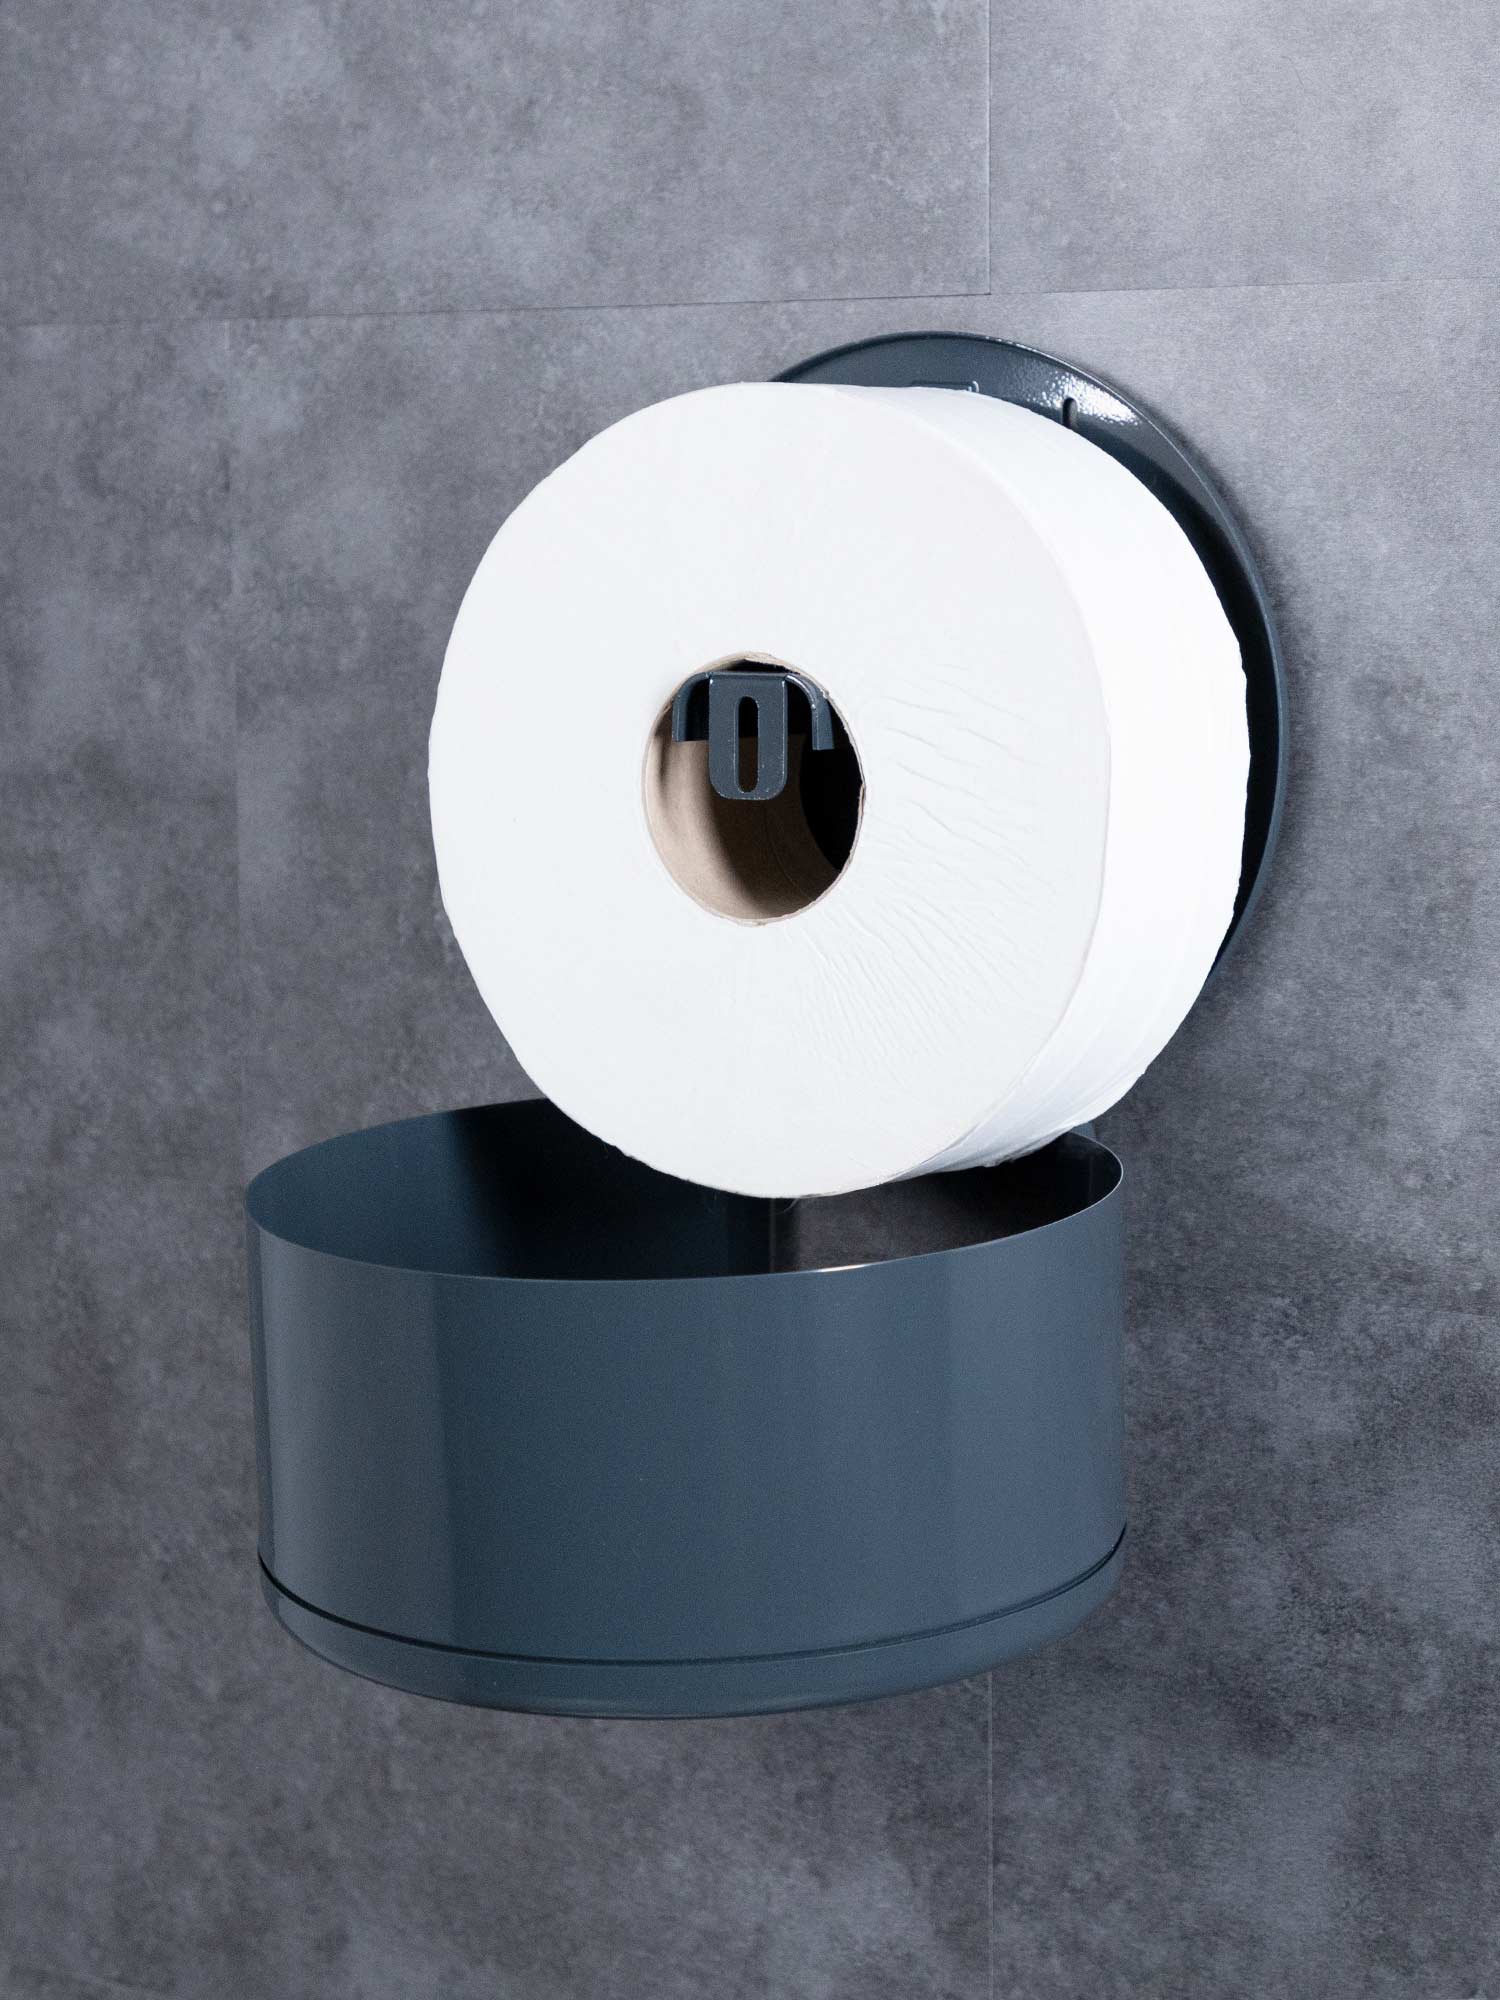 10 inch graphite toilet roll dispenser